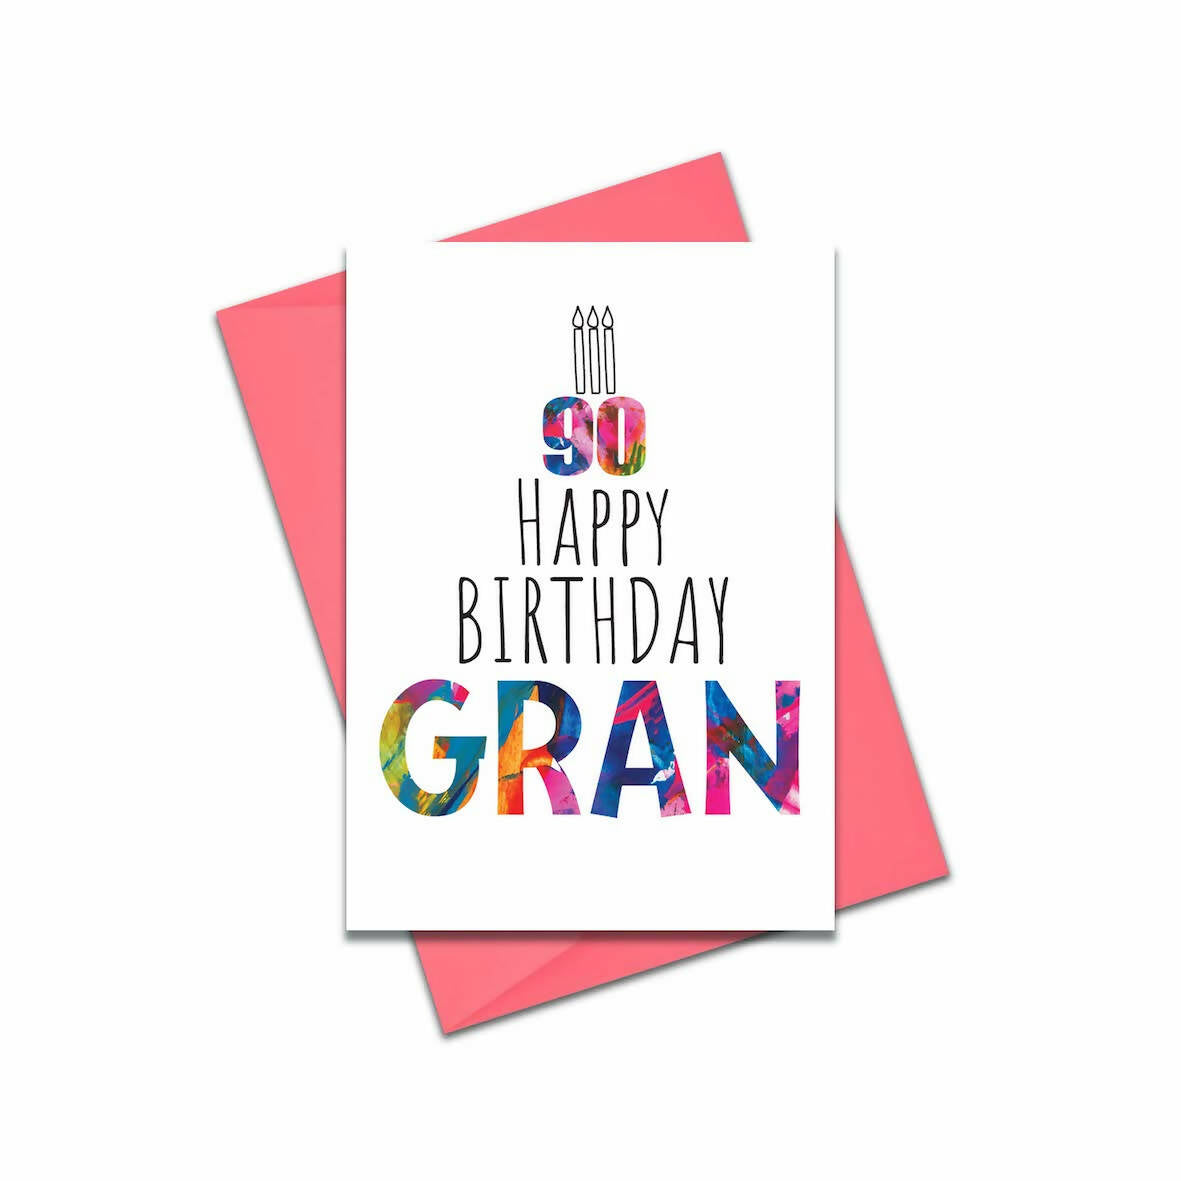 Gran 90th Birthday Card - Modern and Colourful Birthday Card